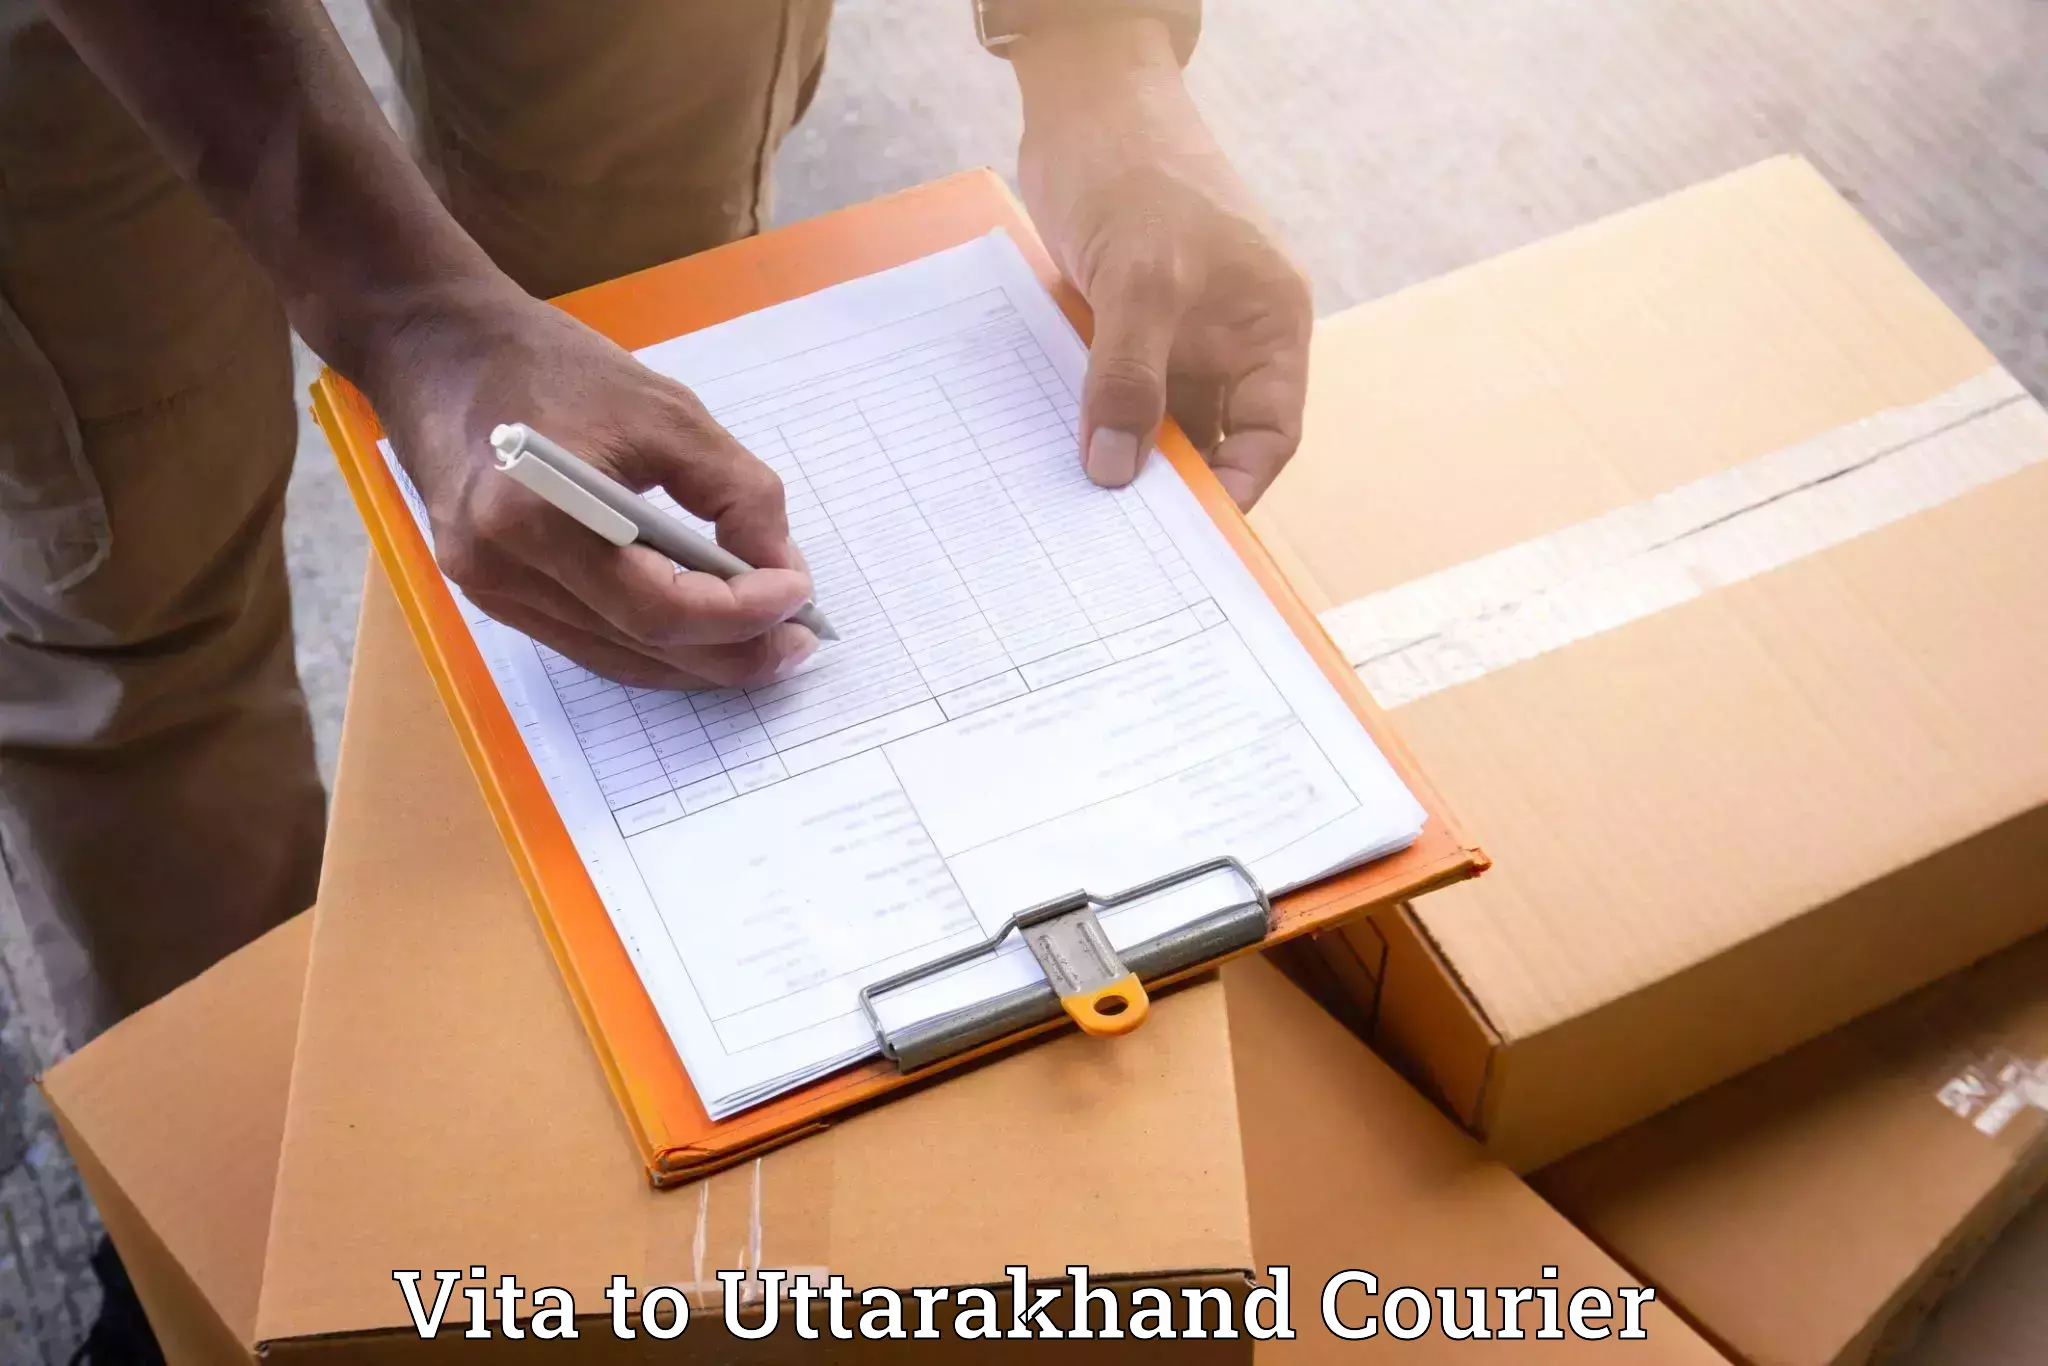 Residential moving experts Vita to Rishikesh